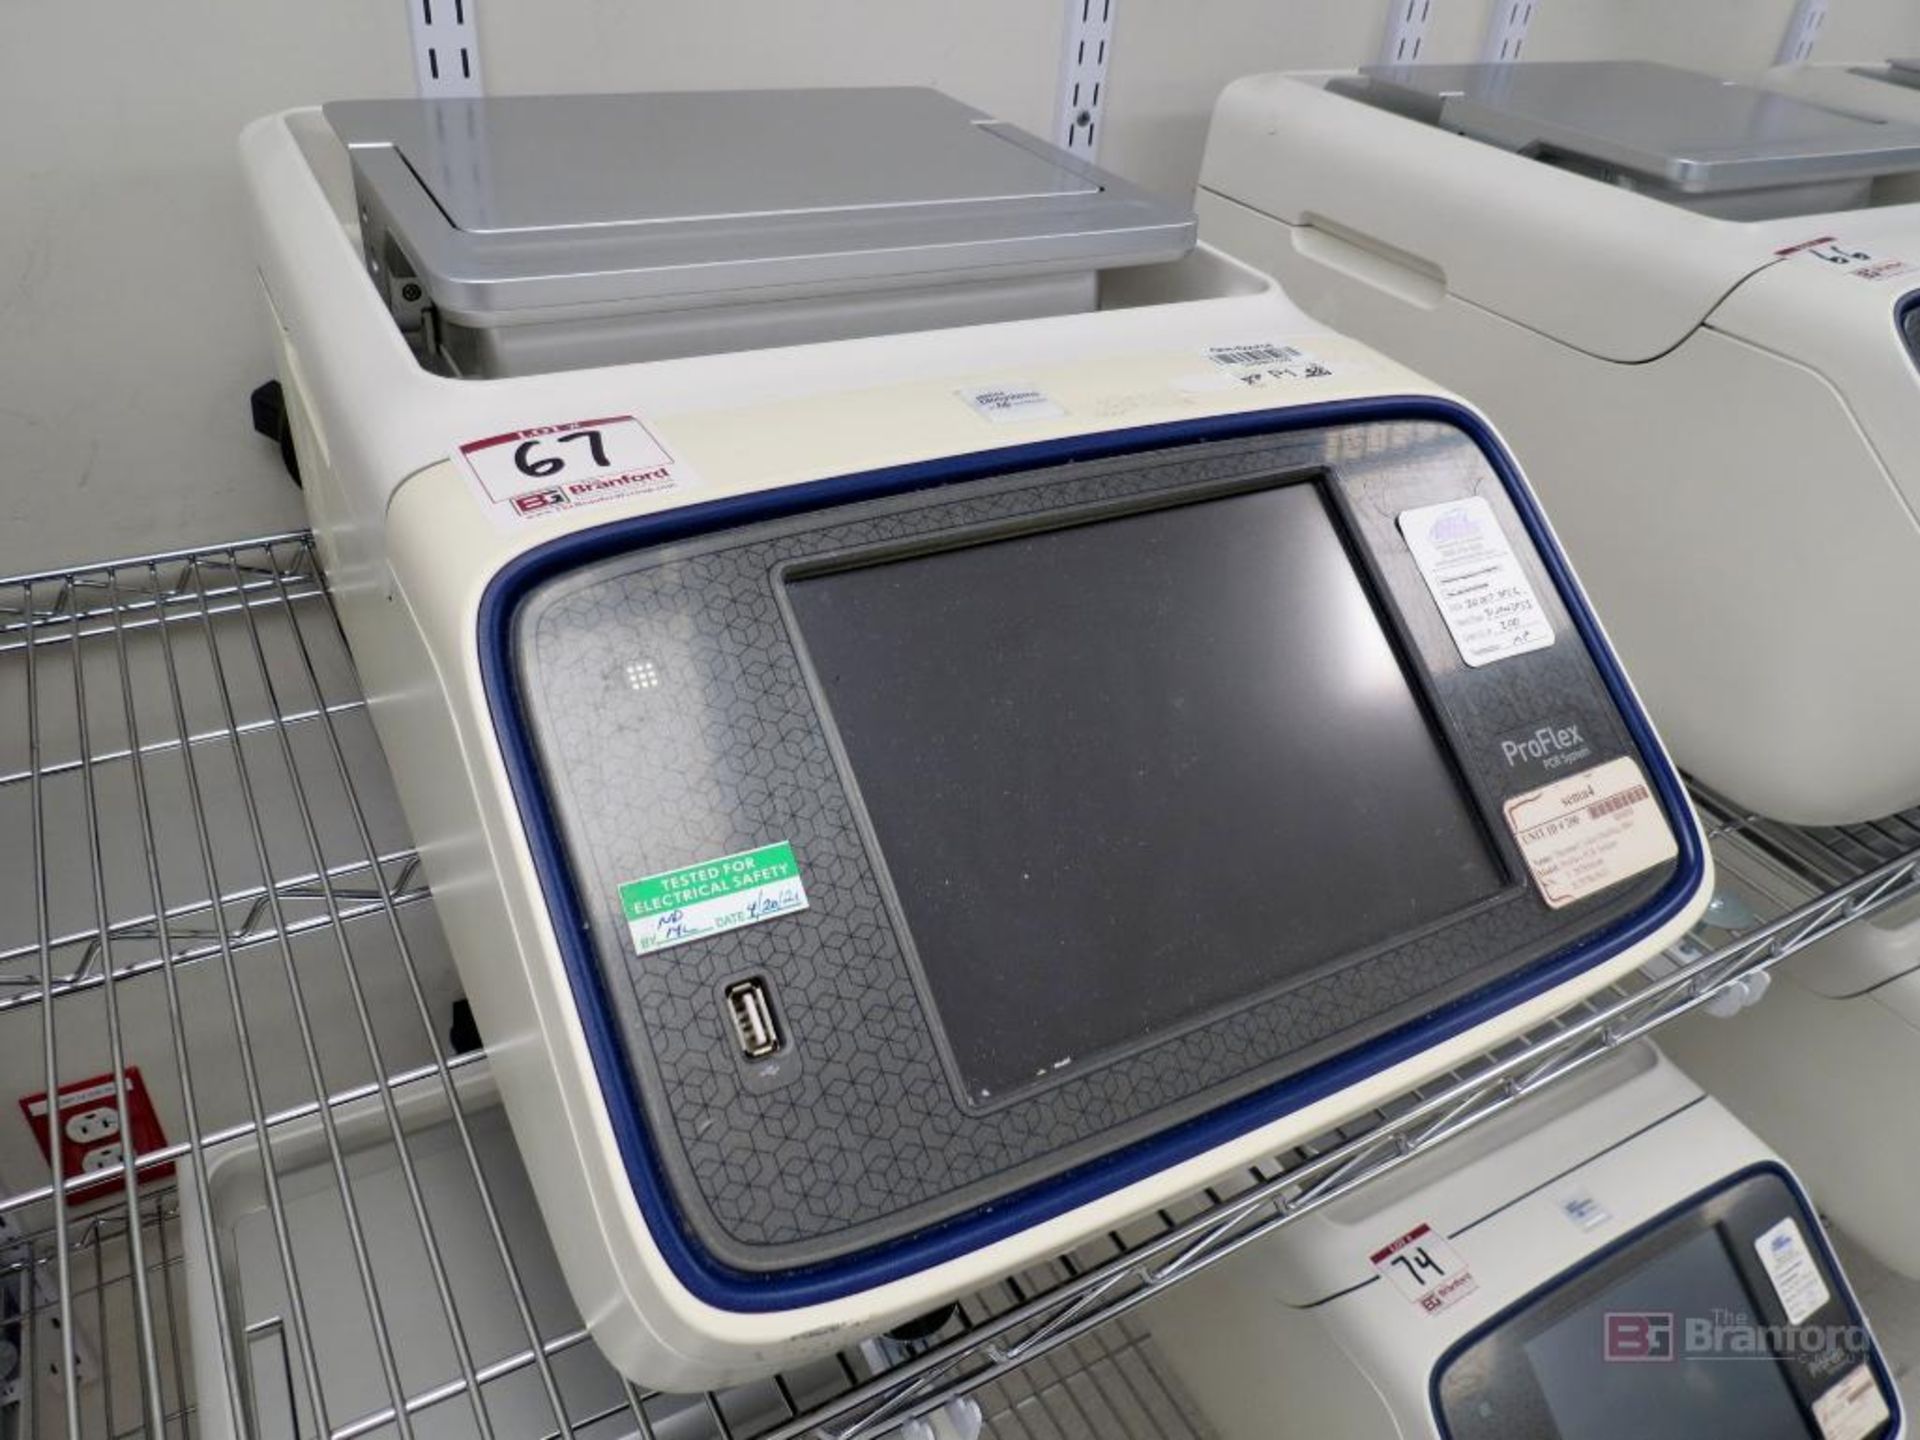 Applied Biosystems Life Technologies ProFlex PCR System